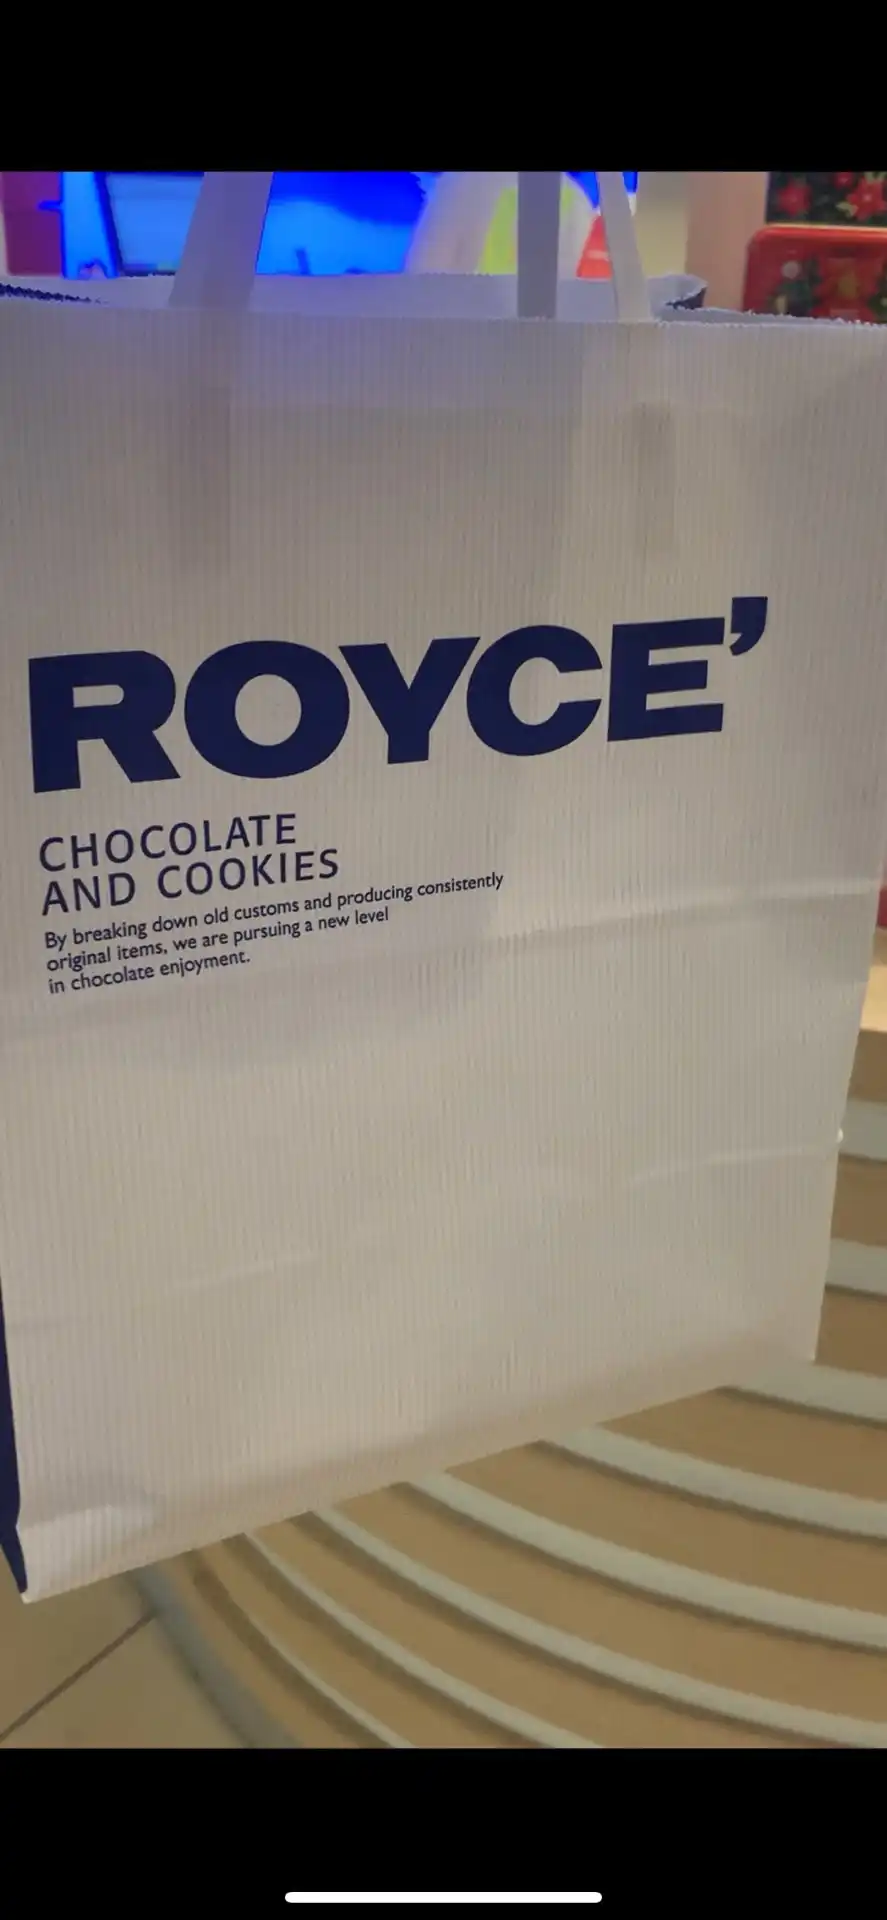 Royce’ Chocolate Malaysia